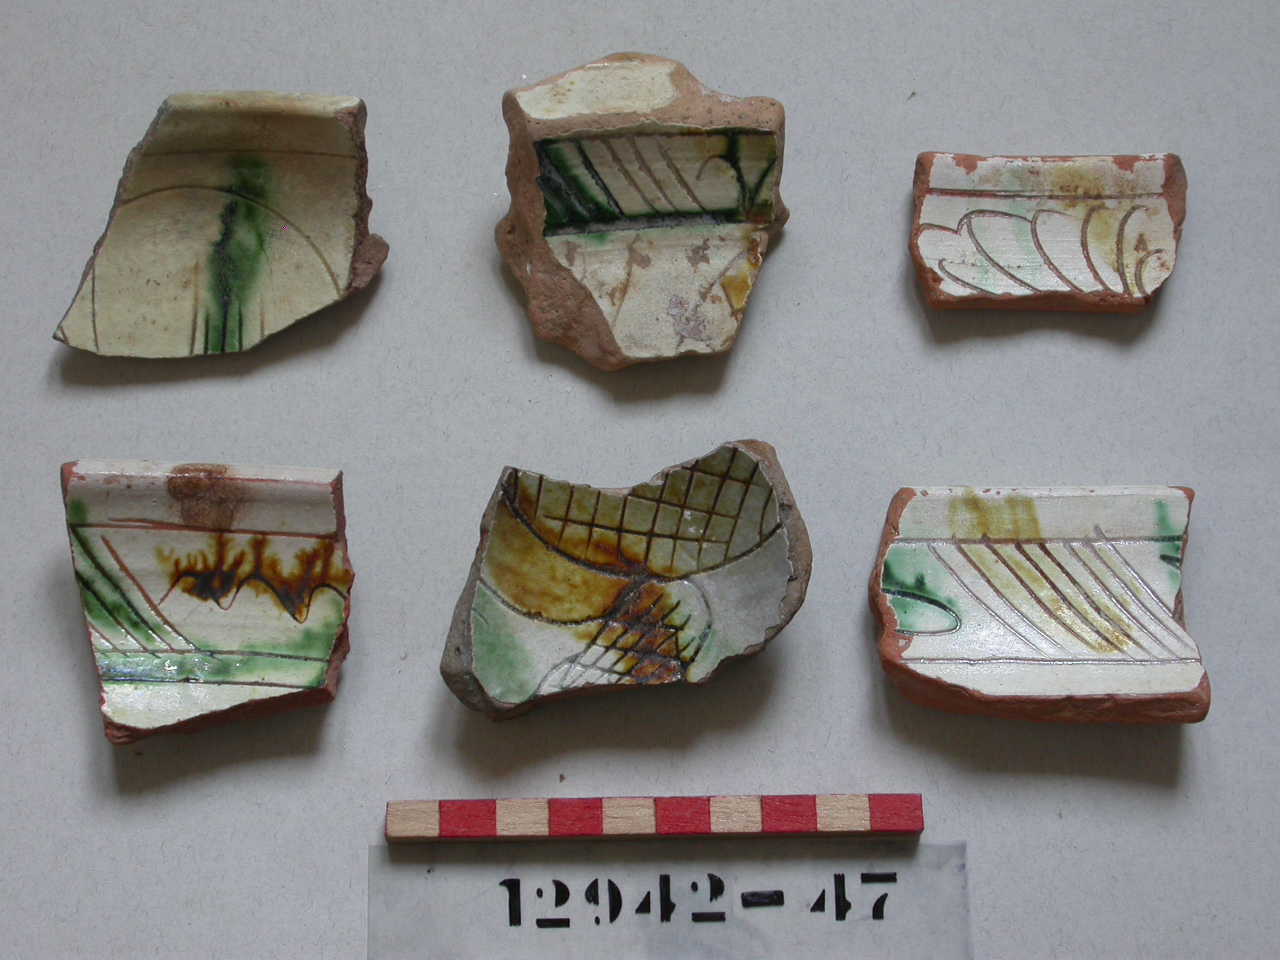 motivi decorativi vegetali stilizzati (bacino, frammento) - ambito veneziano (sec. XV)